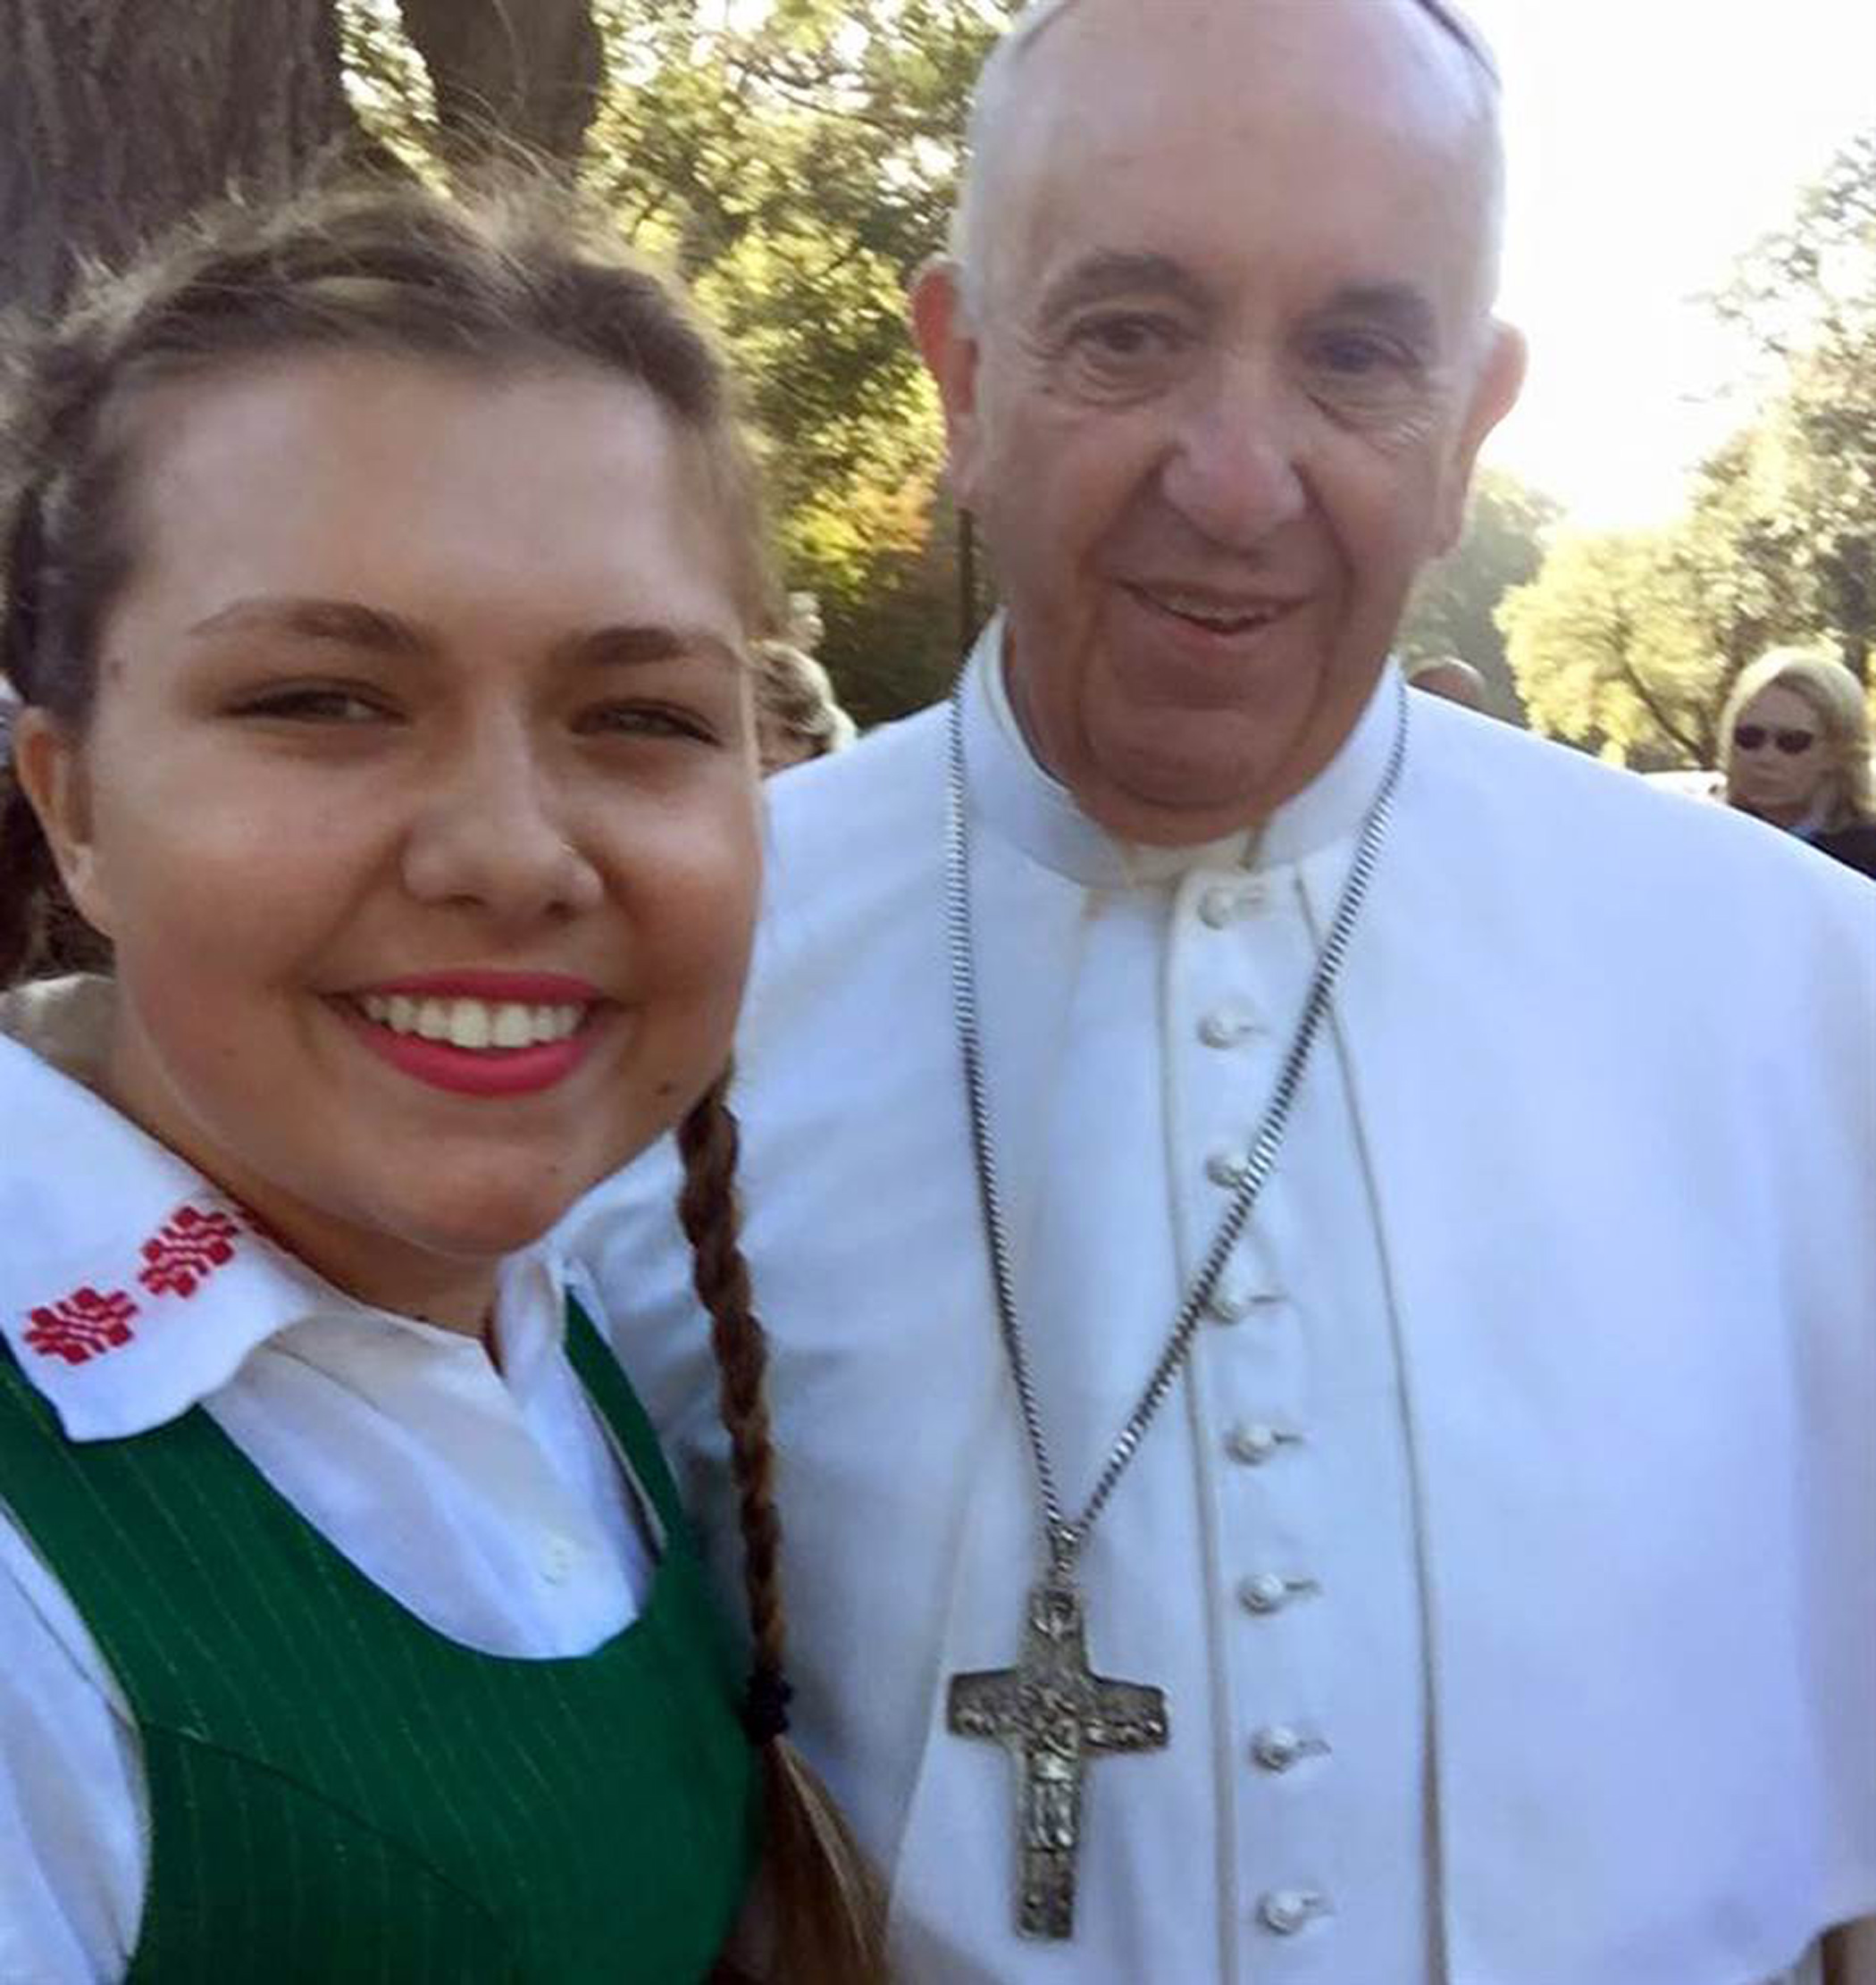 Enija Davidonyte posted this Pontiff snapshot on Facebook.